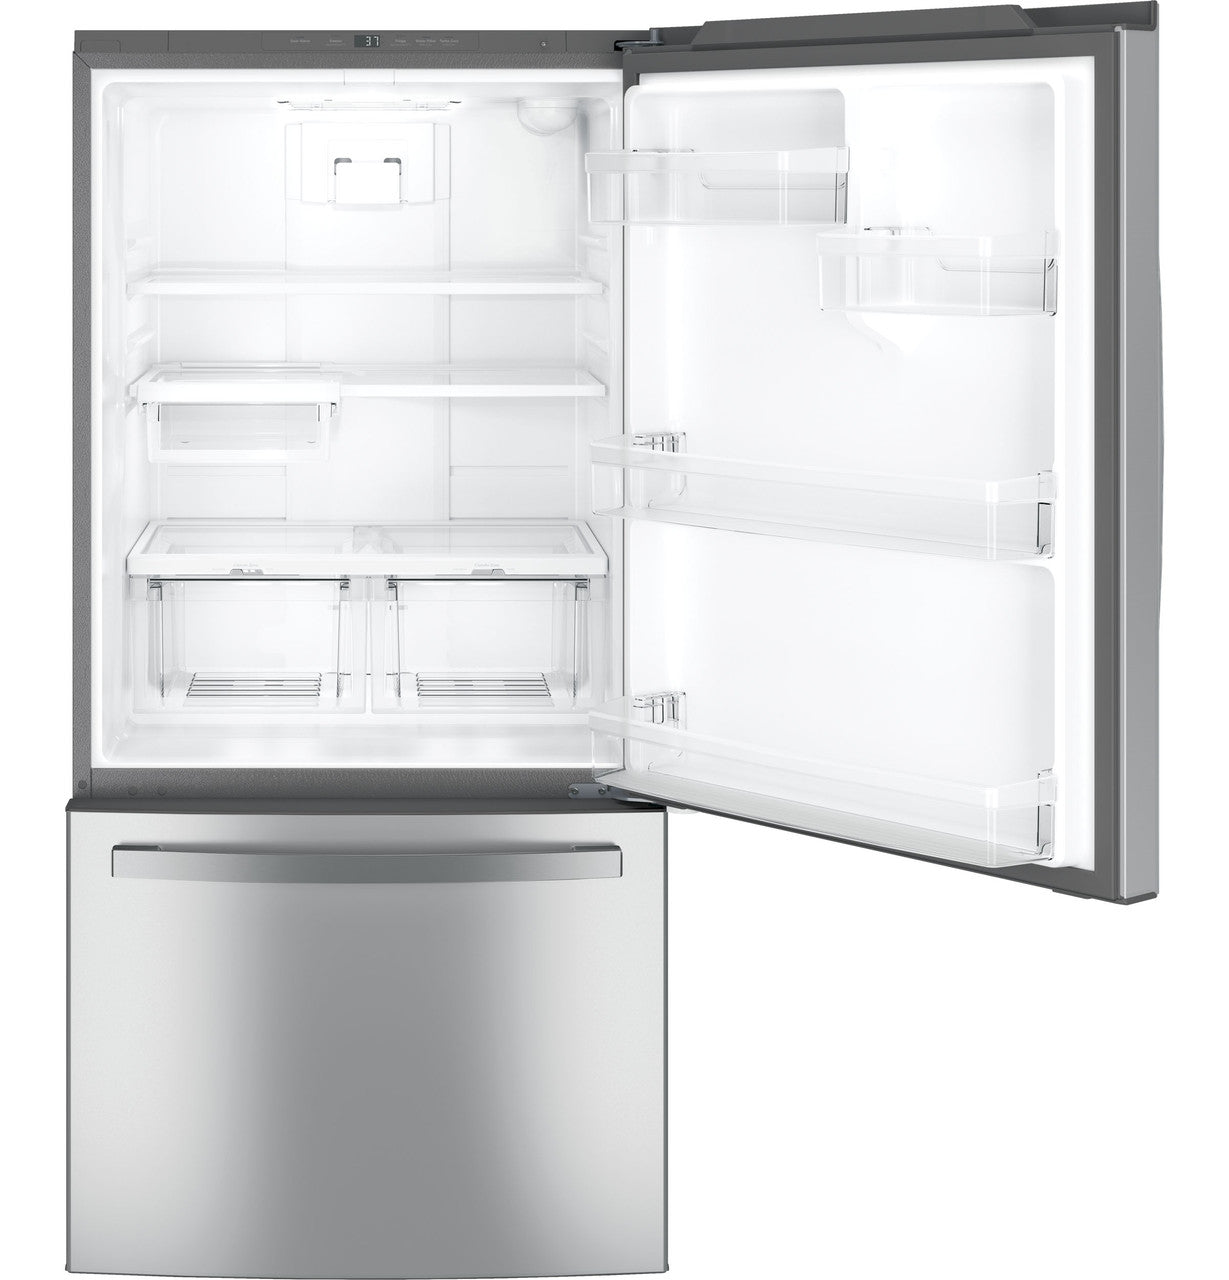 GE Refrigerator 33" Stainless Steel GDE25ESKSS